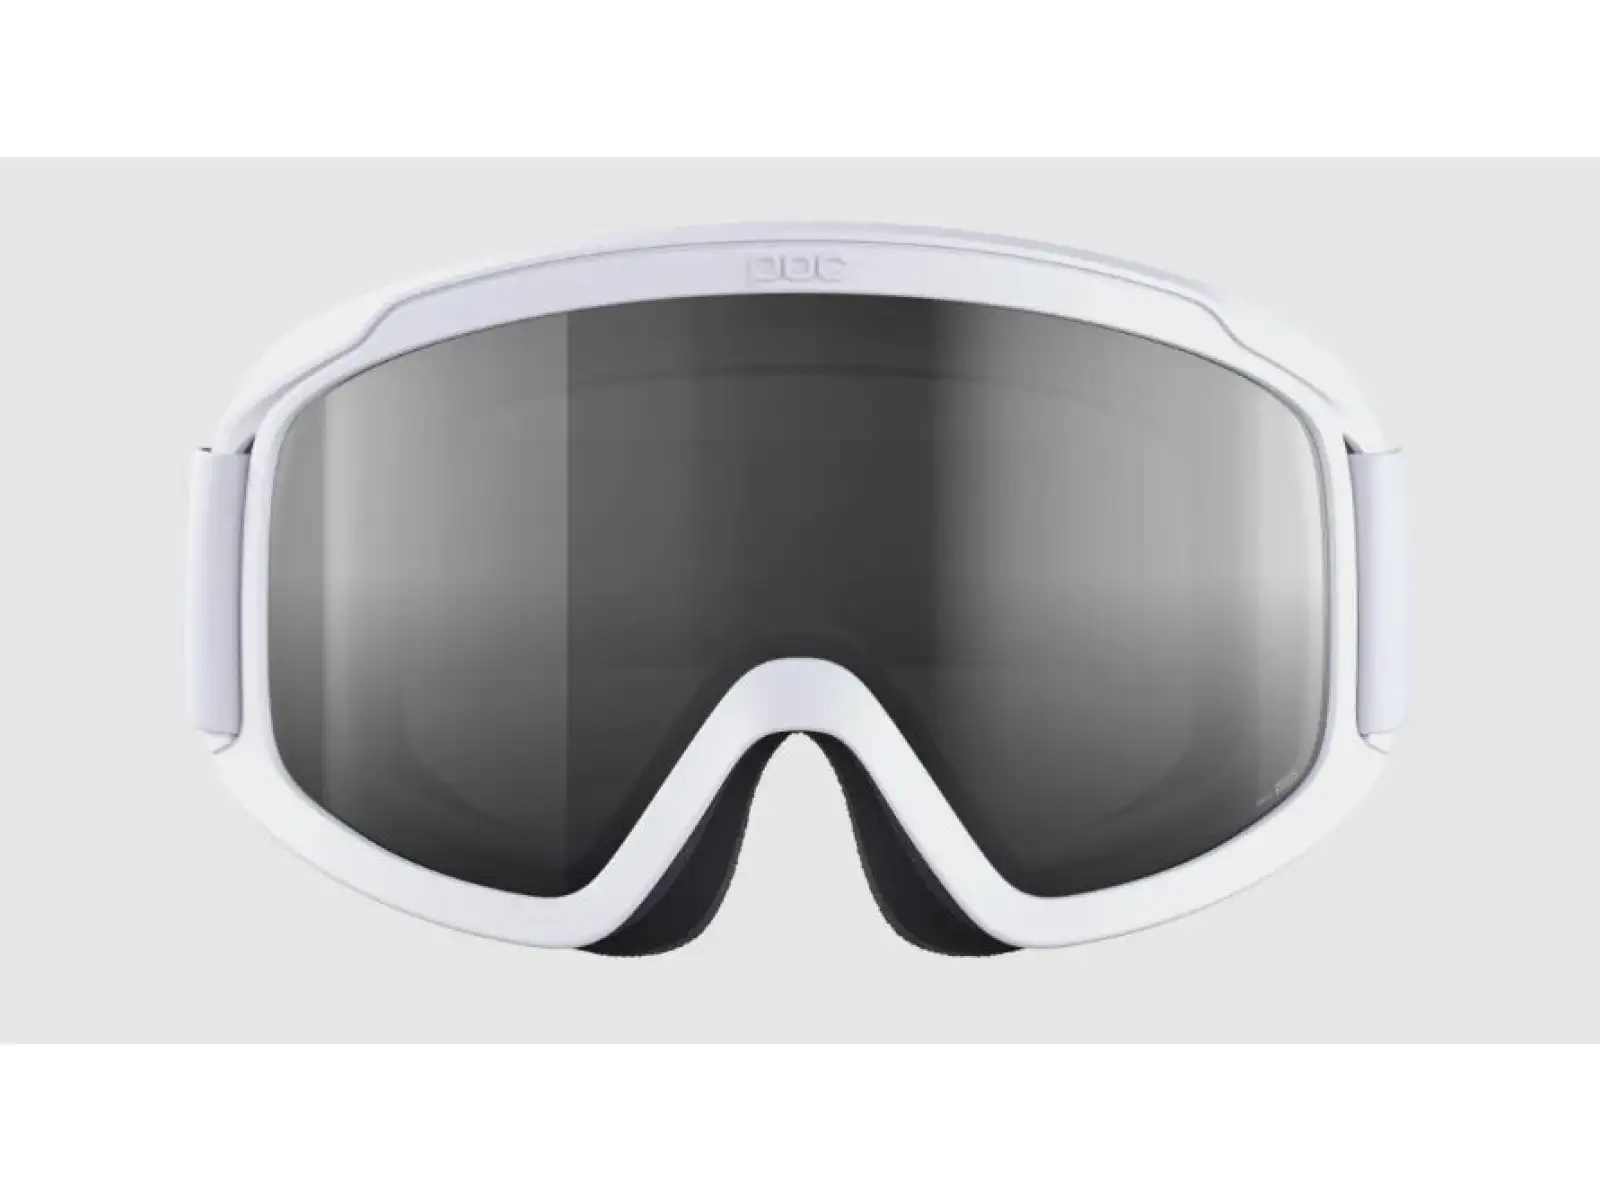 POC Opsin lyžařské brýle Hydrogen White/Neutral Grey/No Mirror vel. uni